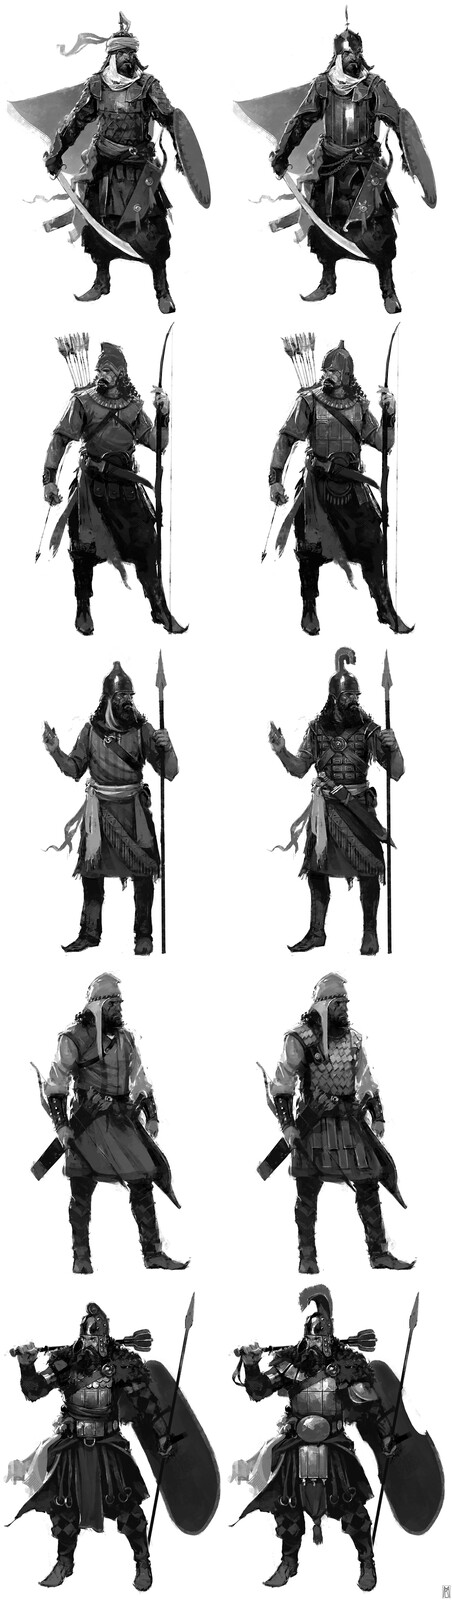 Pre-production concept sketches Assassin's Creed Empire/Origins